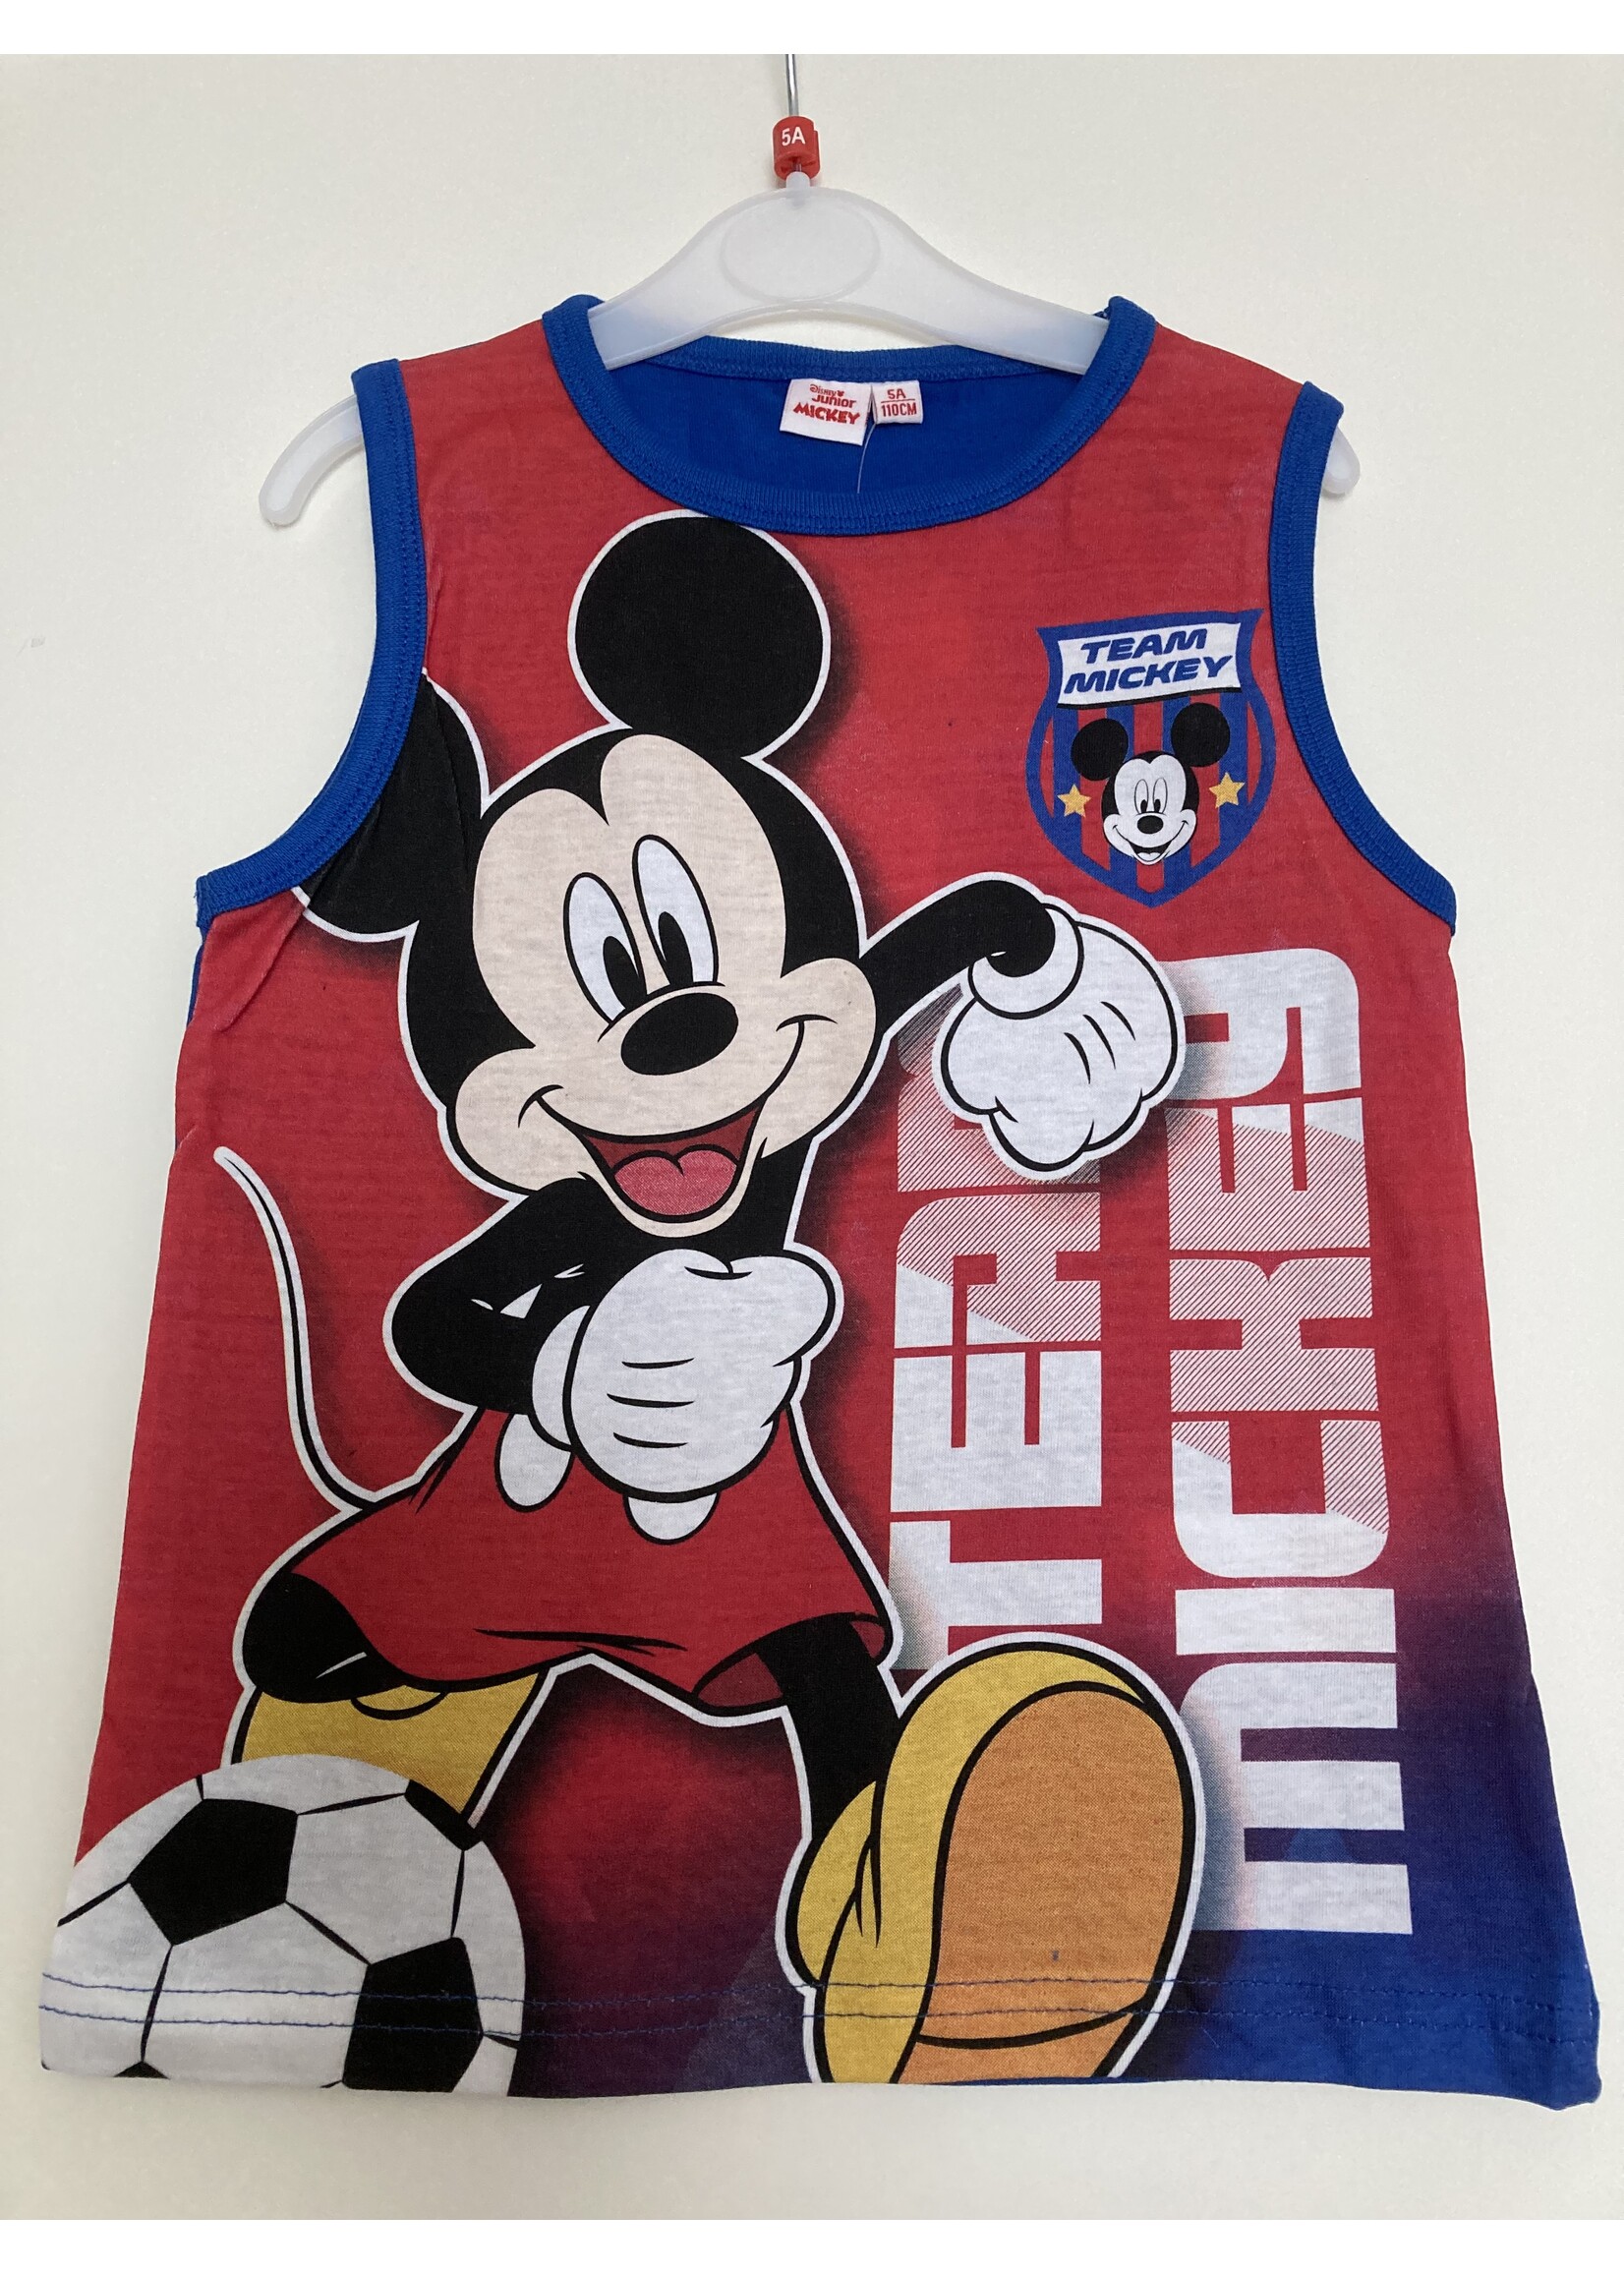 Disney junior Mickey Mouse sleeveless shirt from Disney junior red